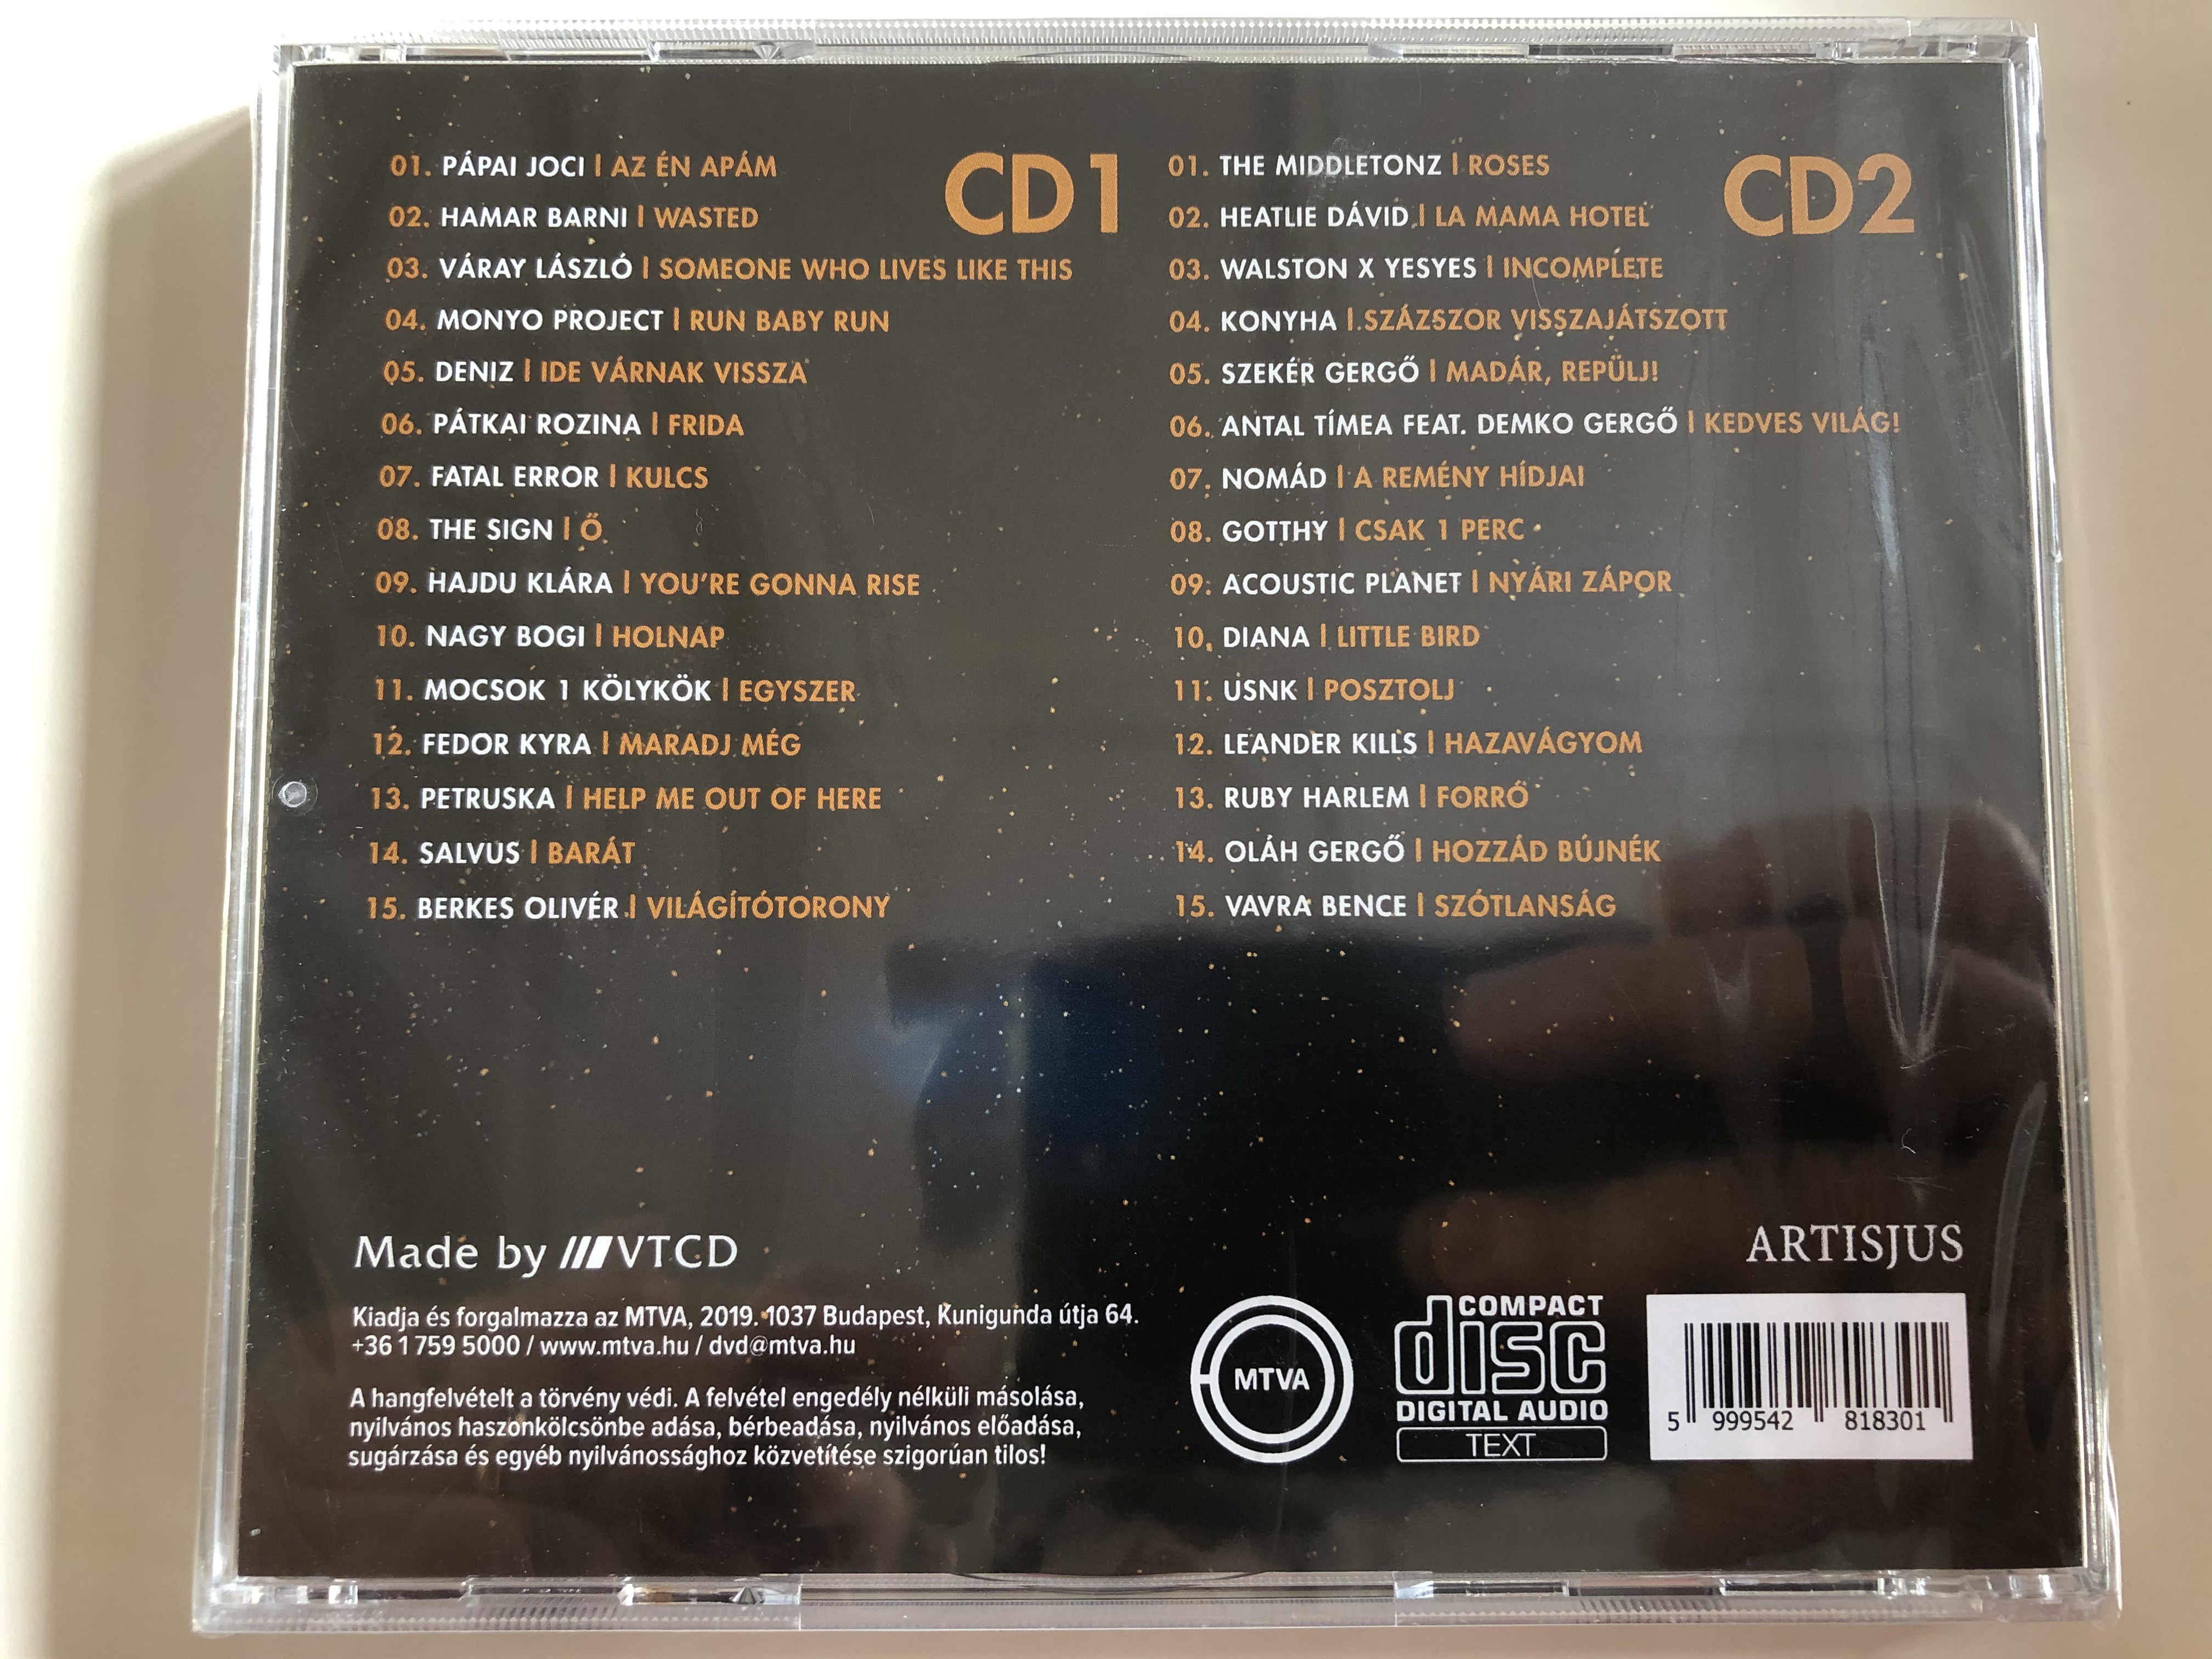 a-dal-2019-dupla-cd-mtva-2x-audio-cd-2019-5999542818301-2-.jpg